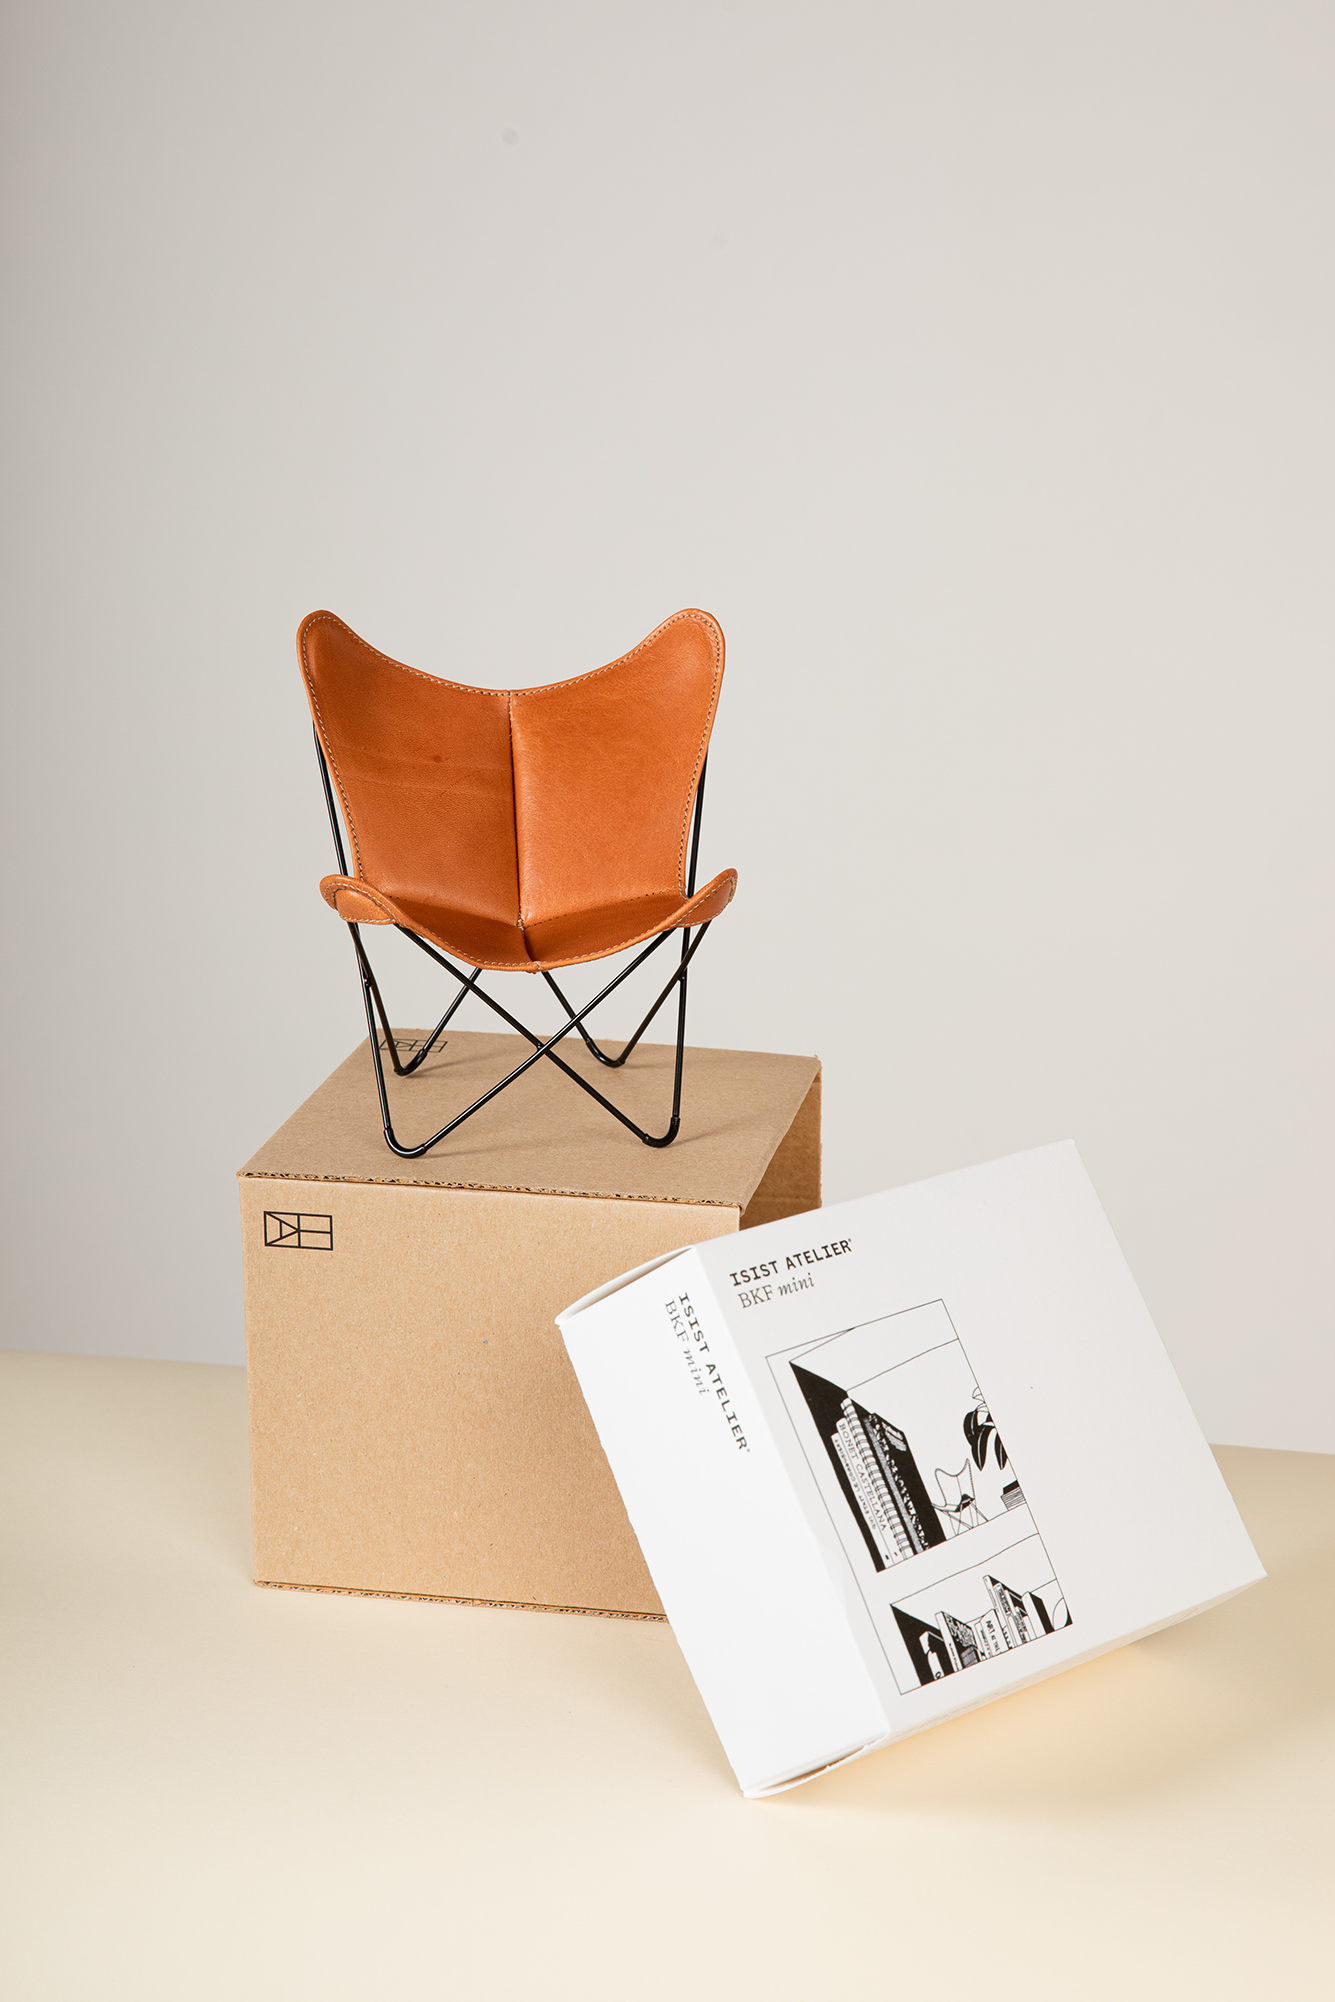 MINI BONET BKF CHAIR - Miniature Butterfly Leather Chair by Bonet, Ferrari & Kurchan